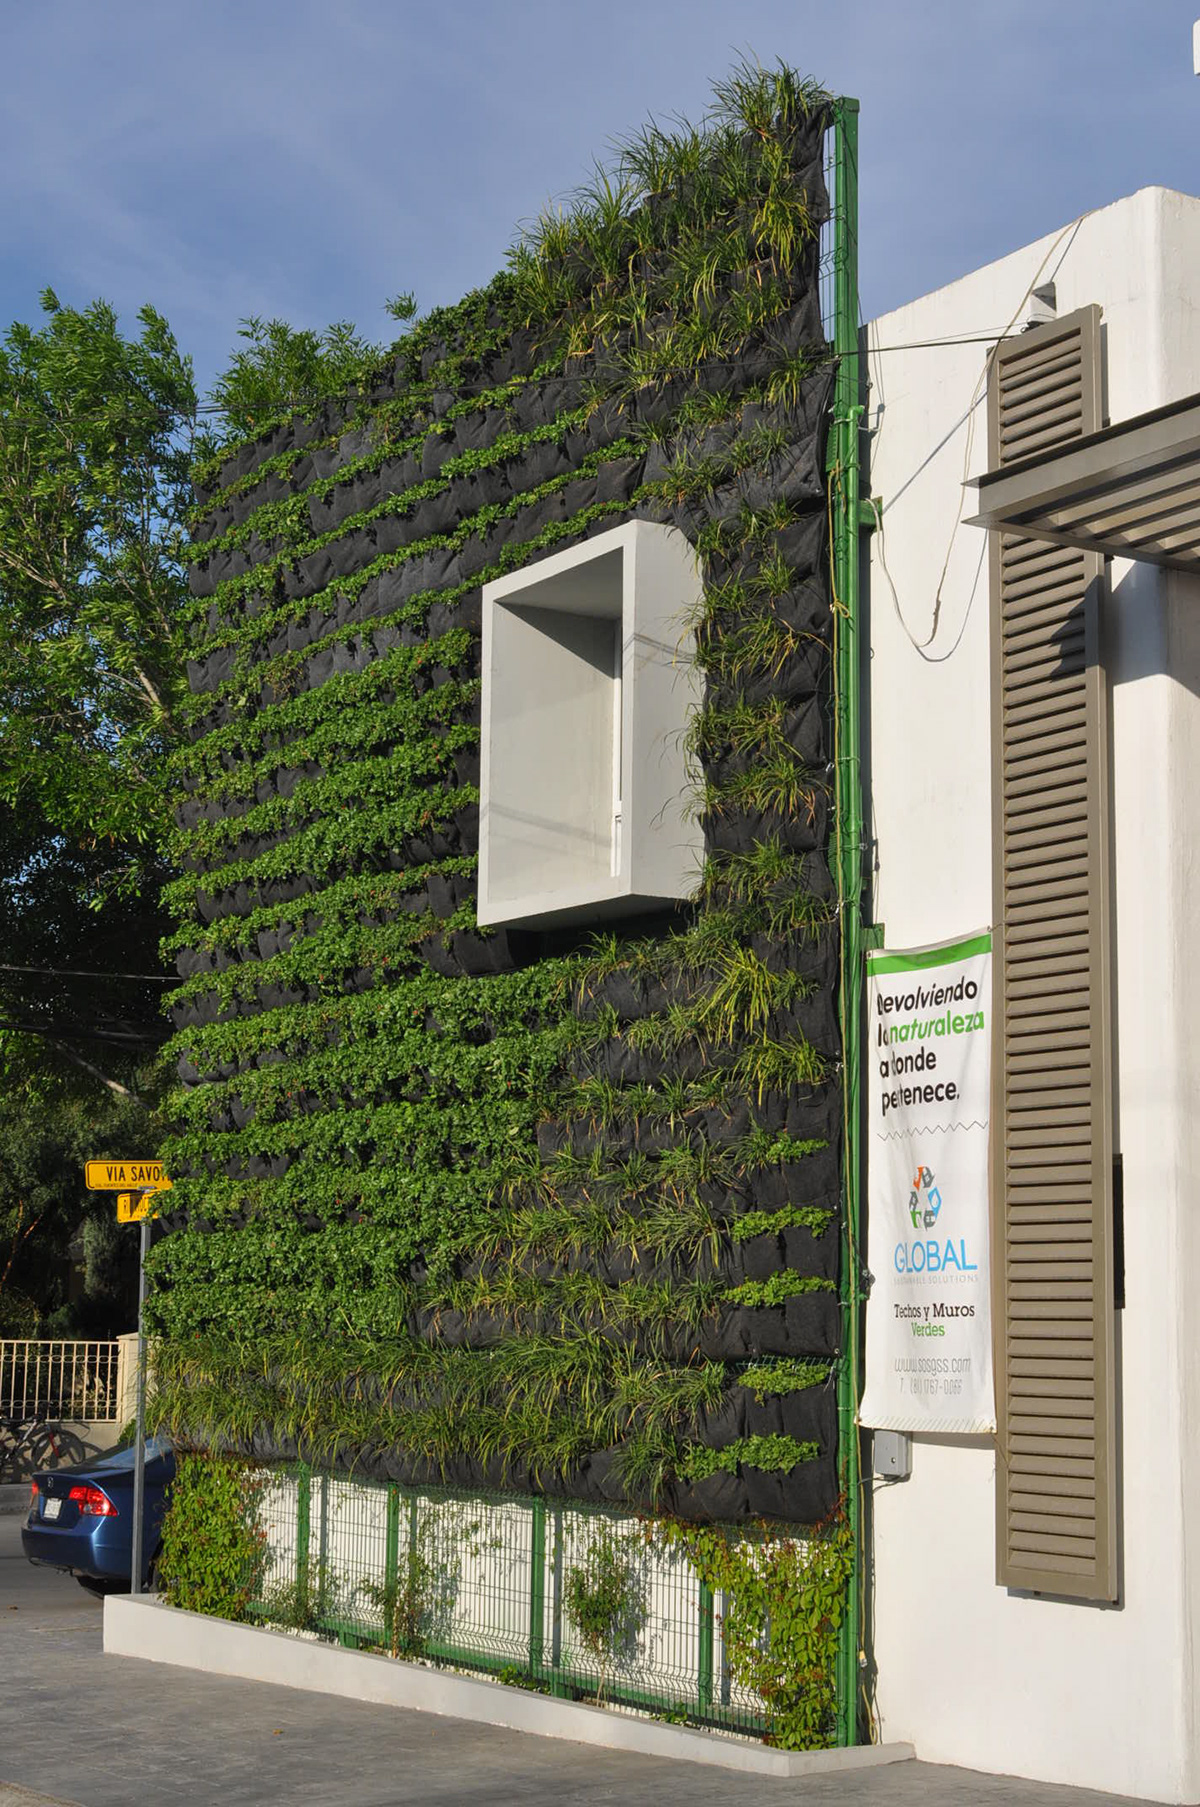 greenwall muroverde verticalgarden module modular jardinvertical vegetated greenhouse